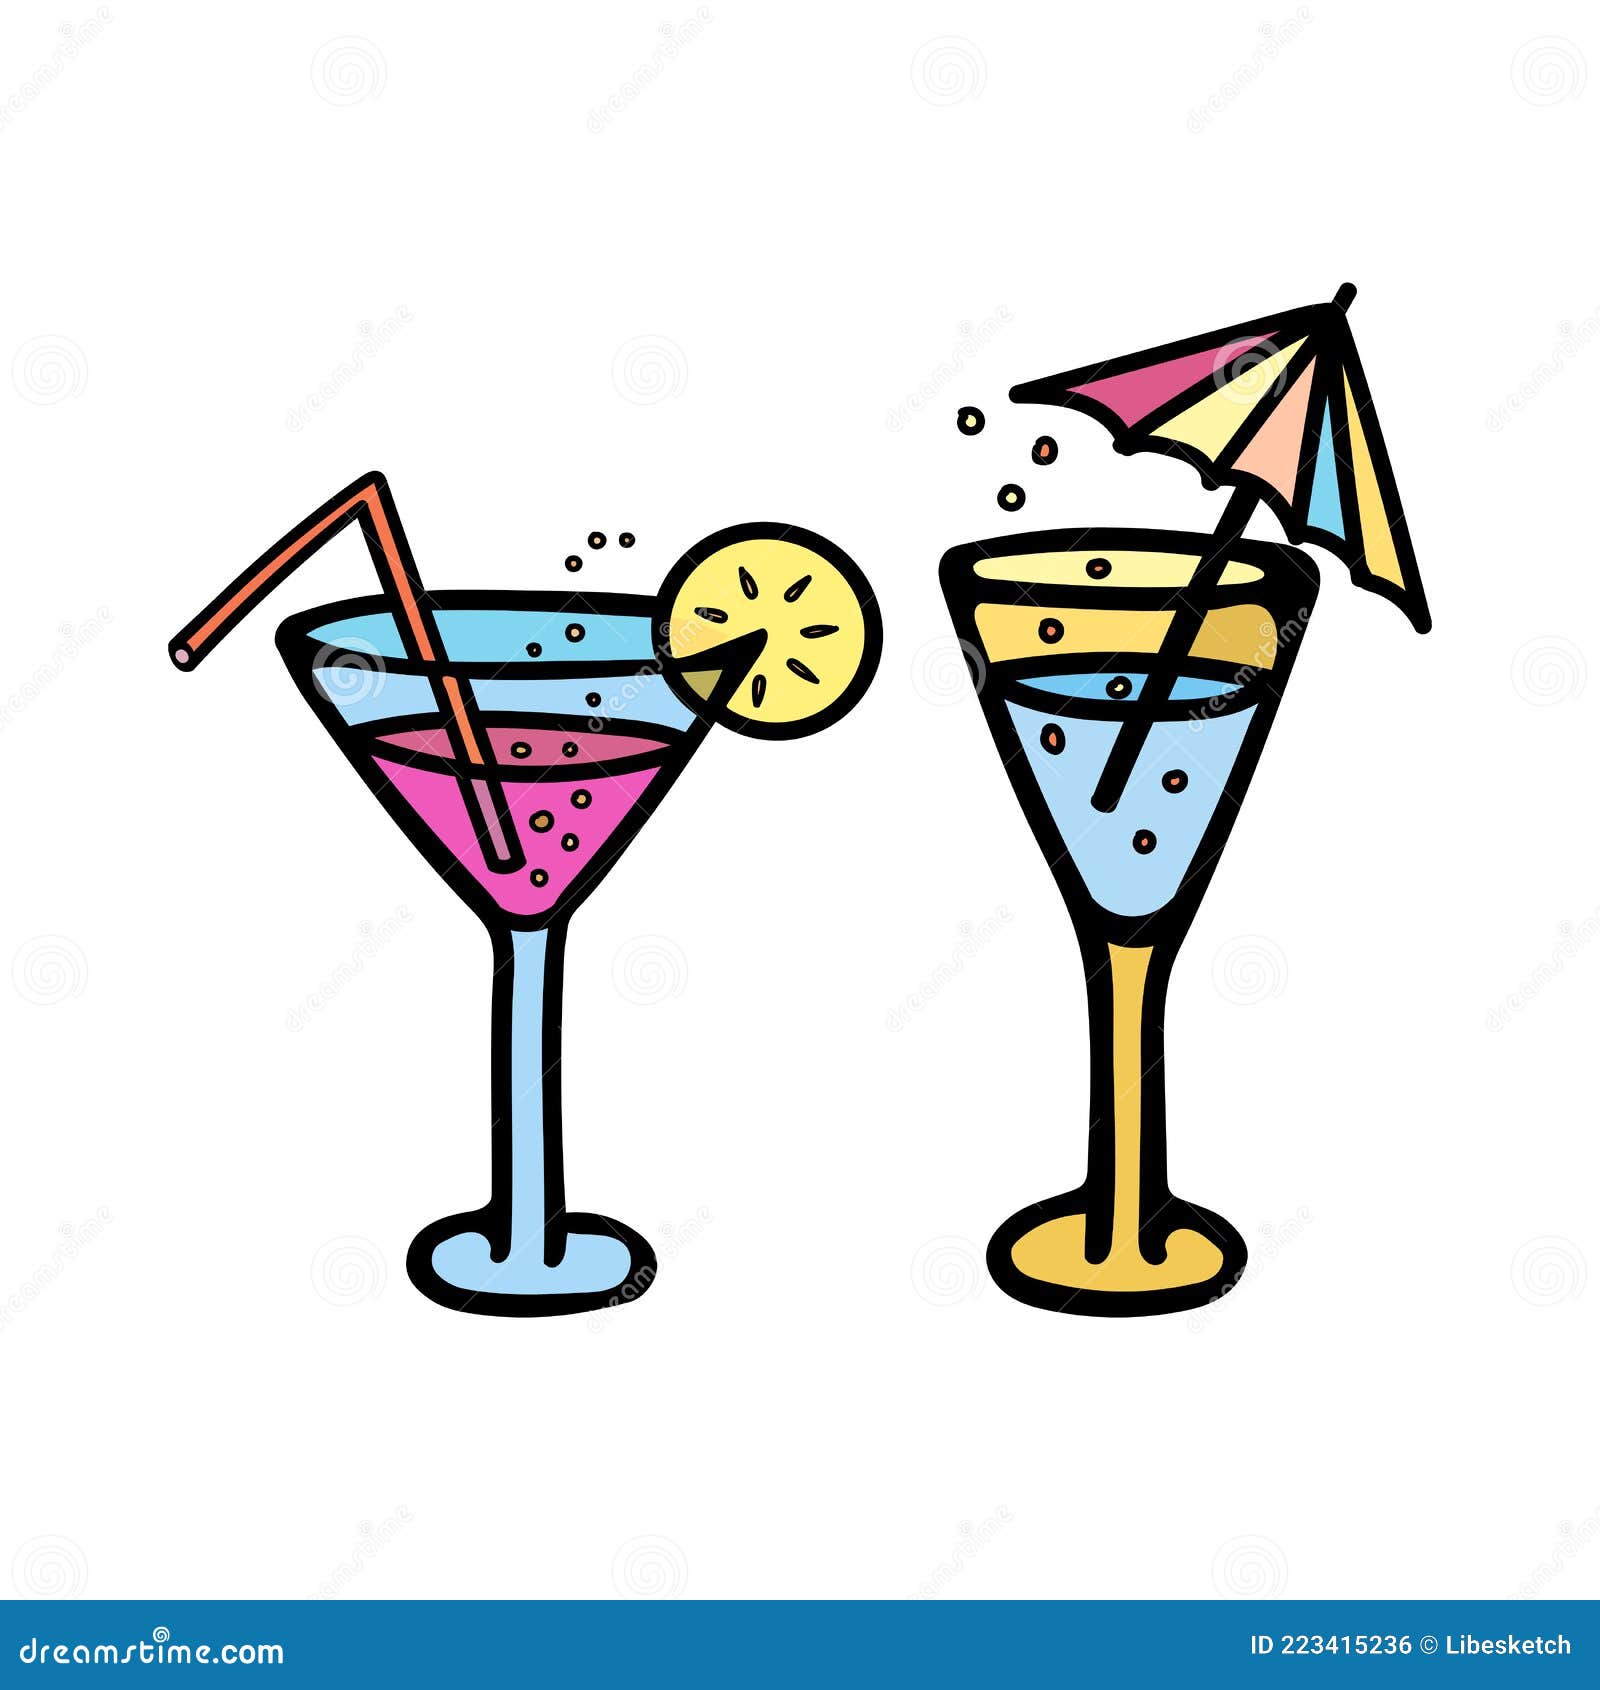 https://thumbs.dreamstime.com/z/set-color-vector-illustrations-cocktail-glasses-bubbles-lemon-umbrella-straw-icon-bar-club-logo-website-party-cafe-223415236.jpg